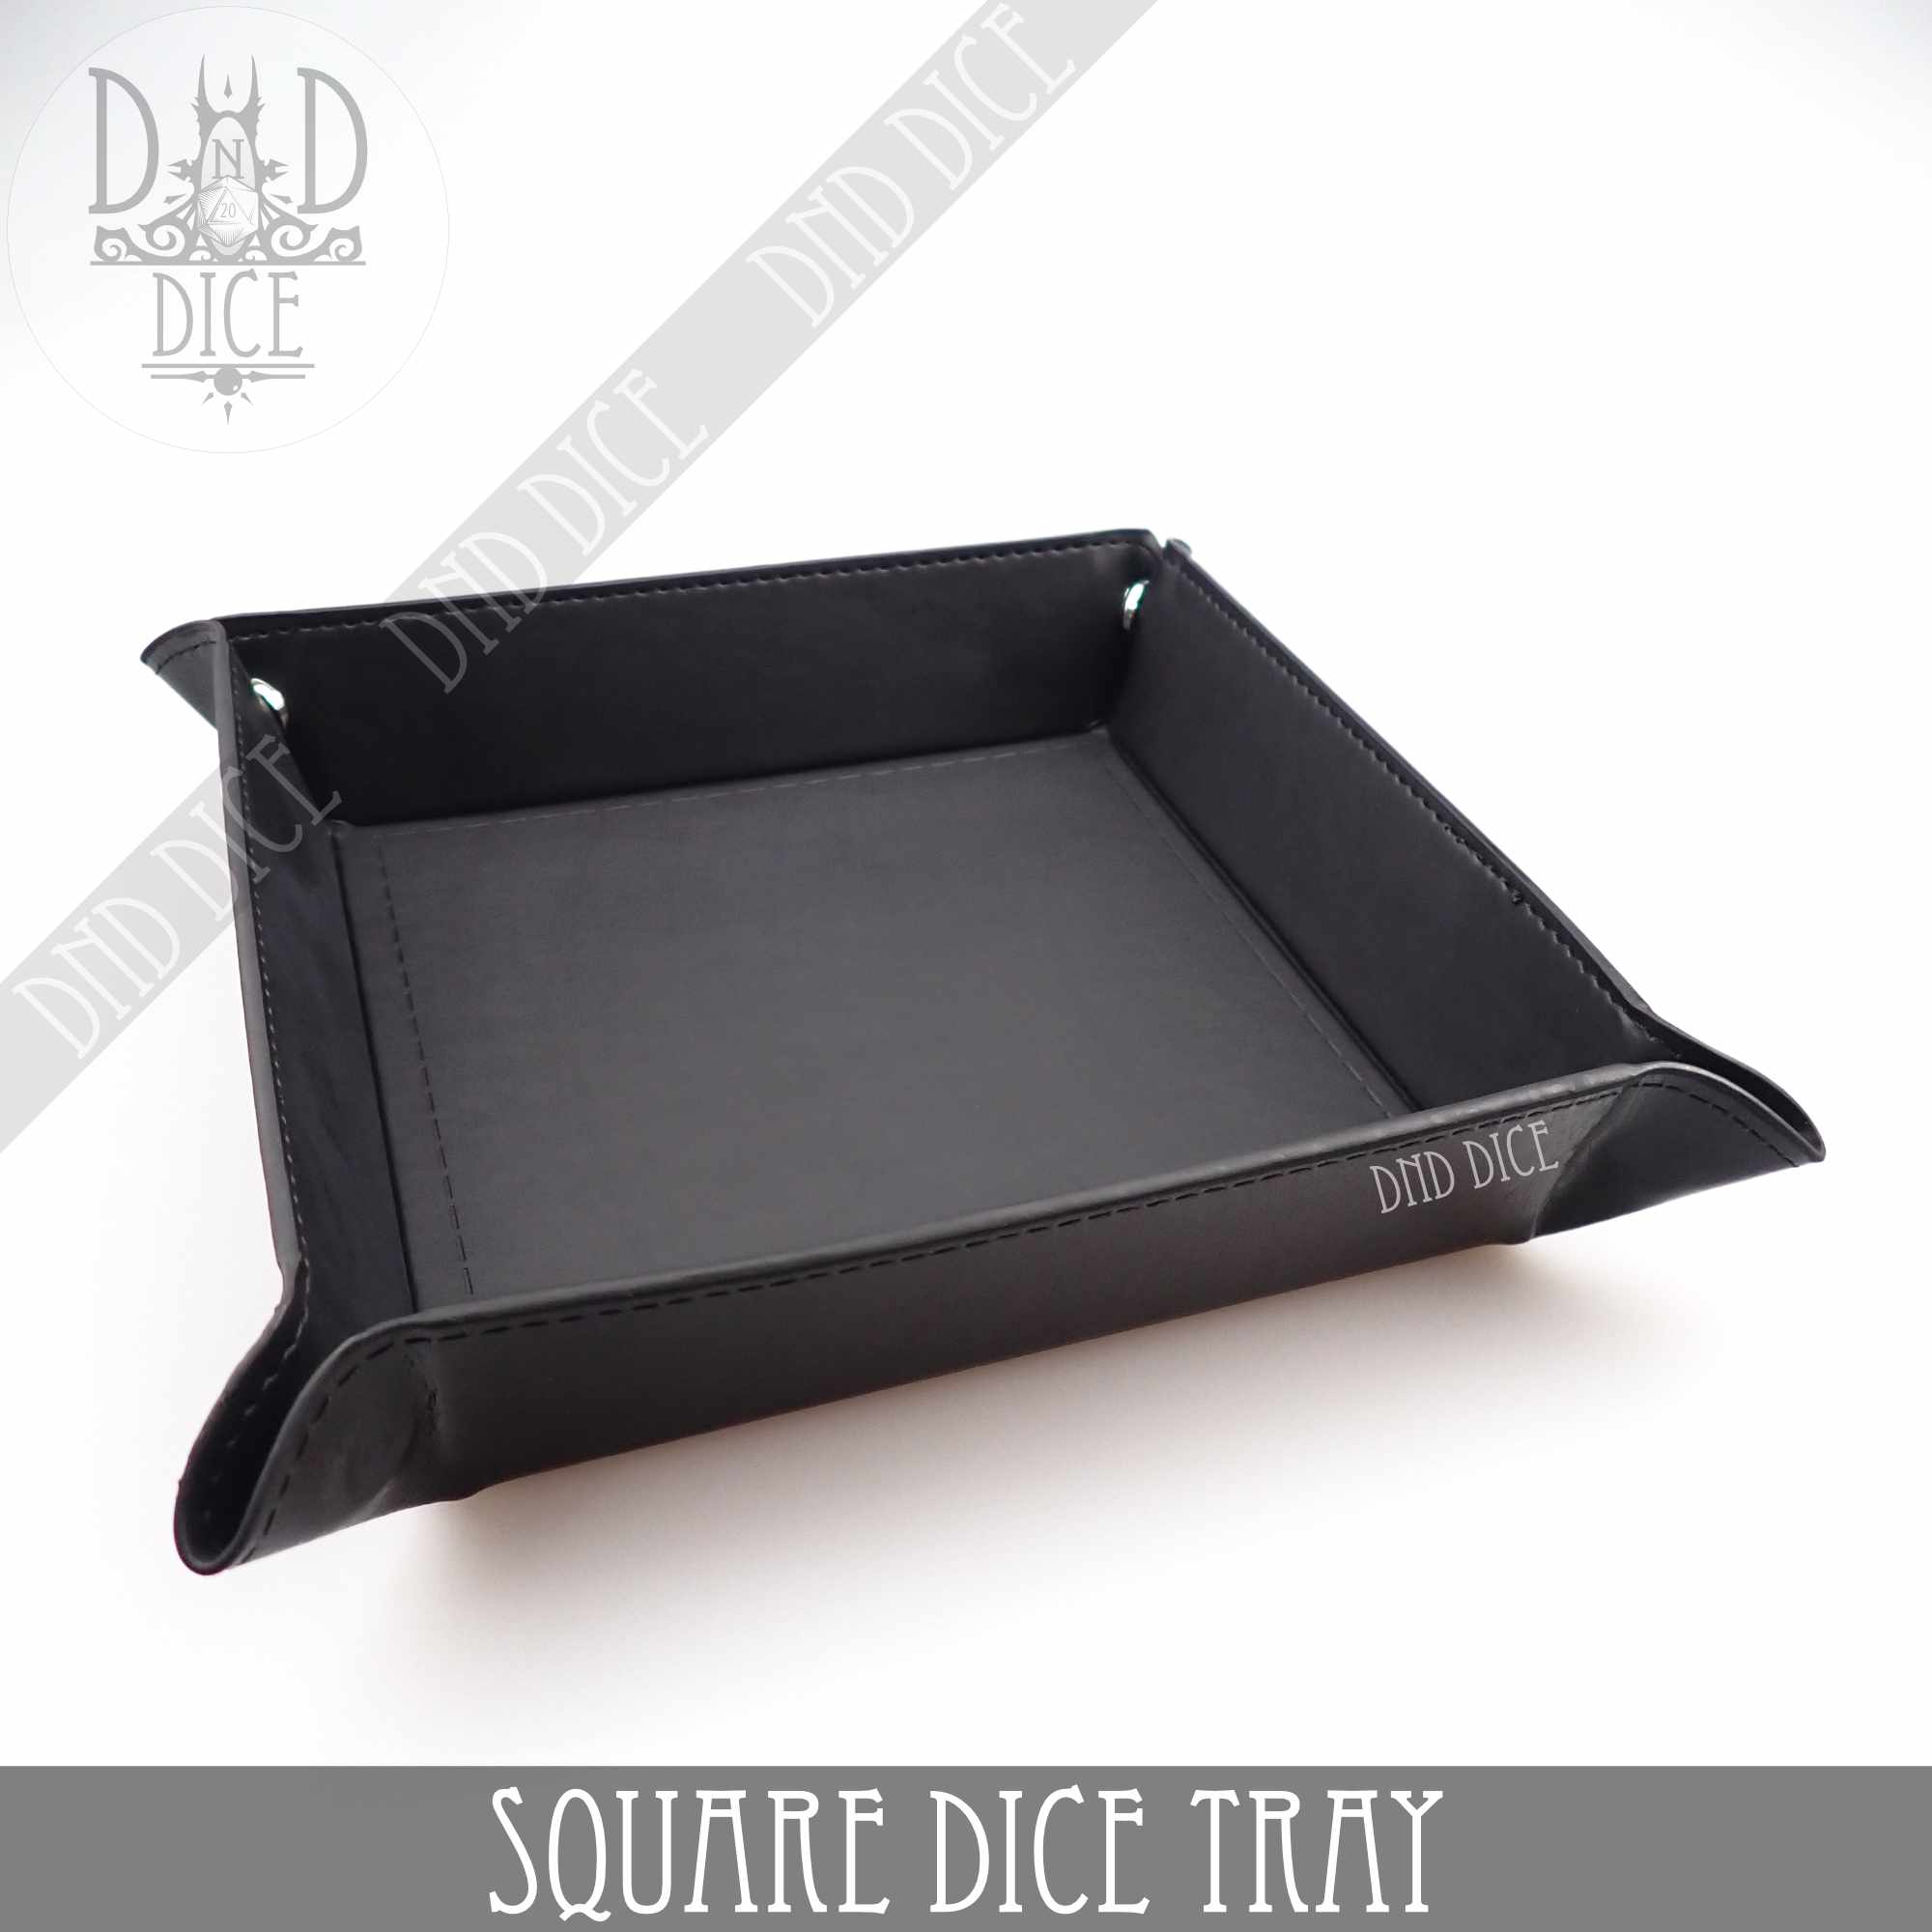 Square Dice Tray